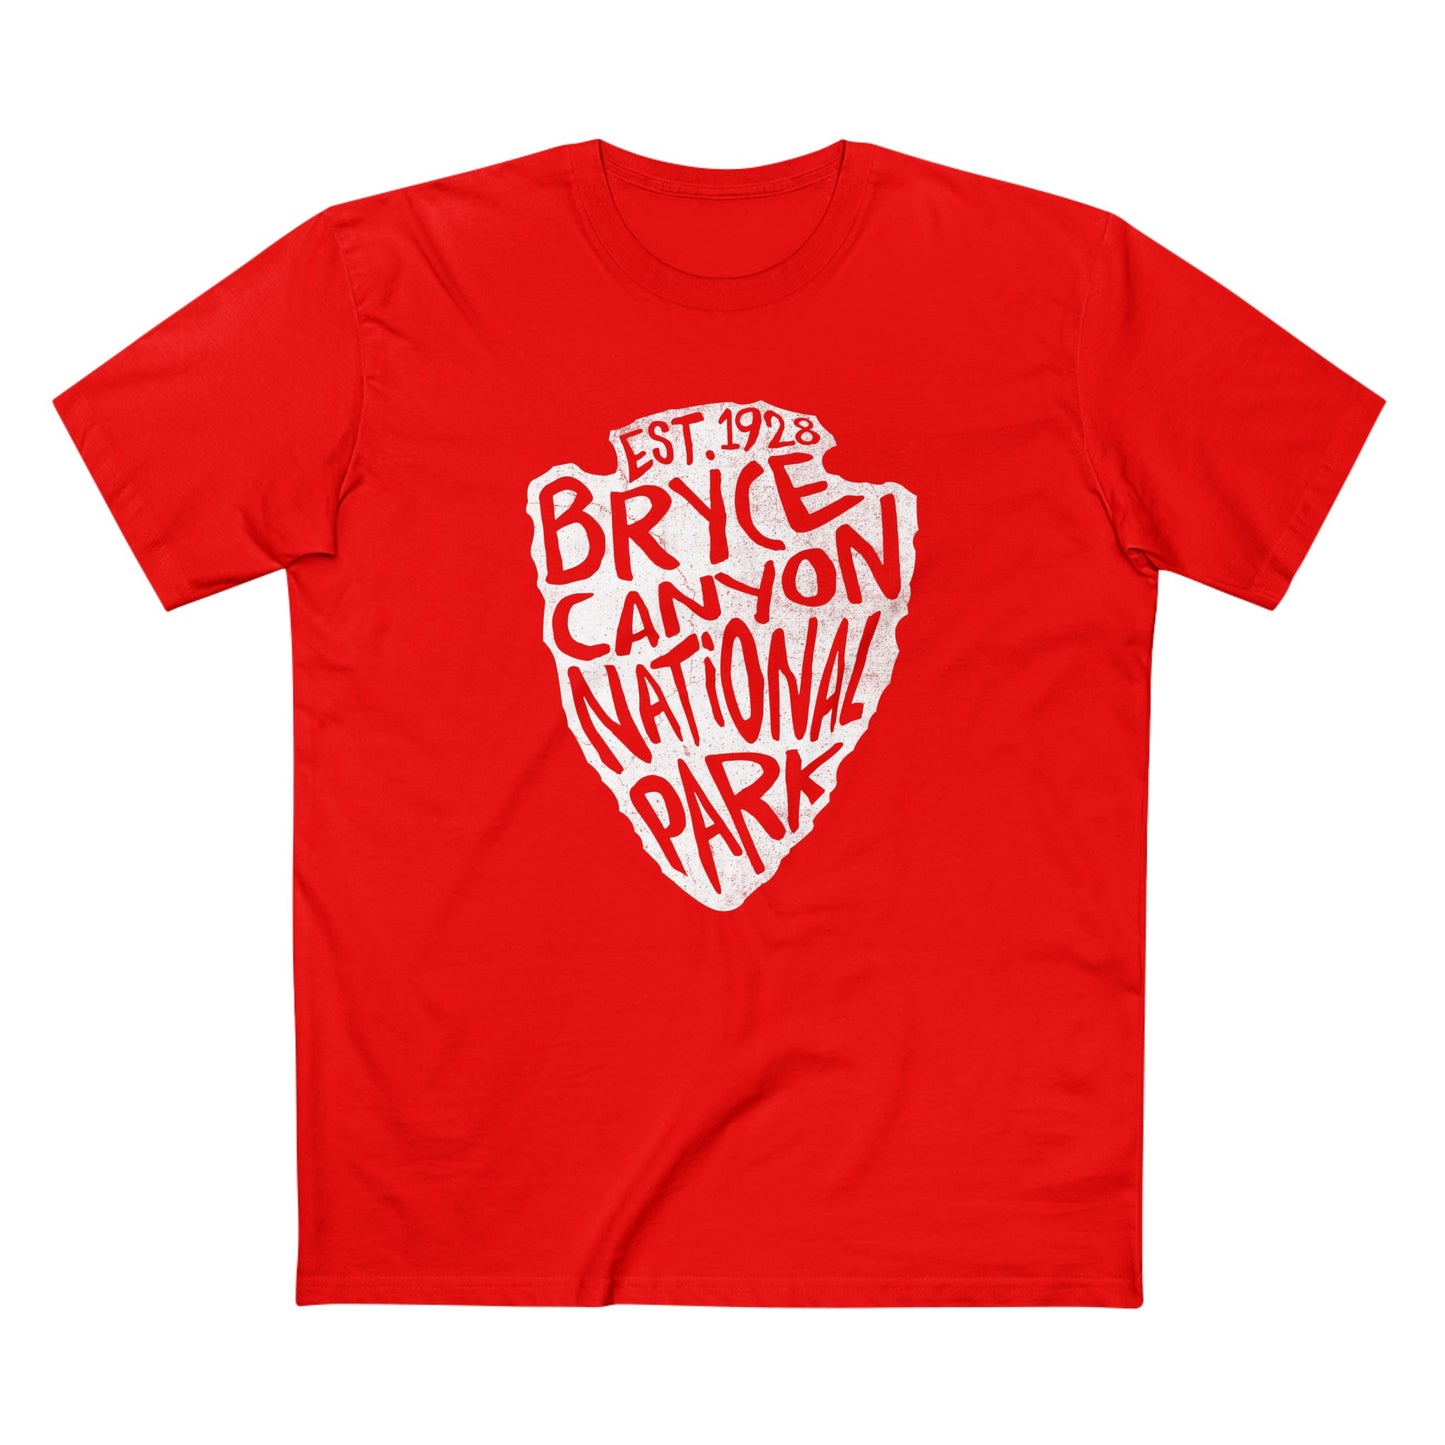 Bryce Canyon National Park T-Shirt - Arrowhead Design